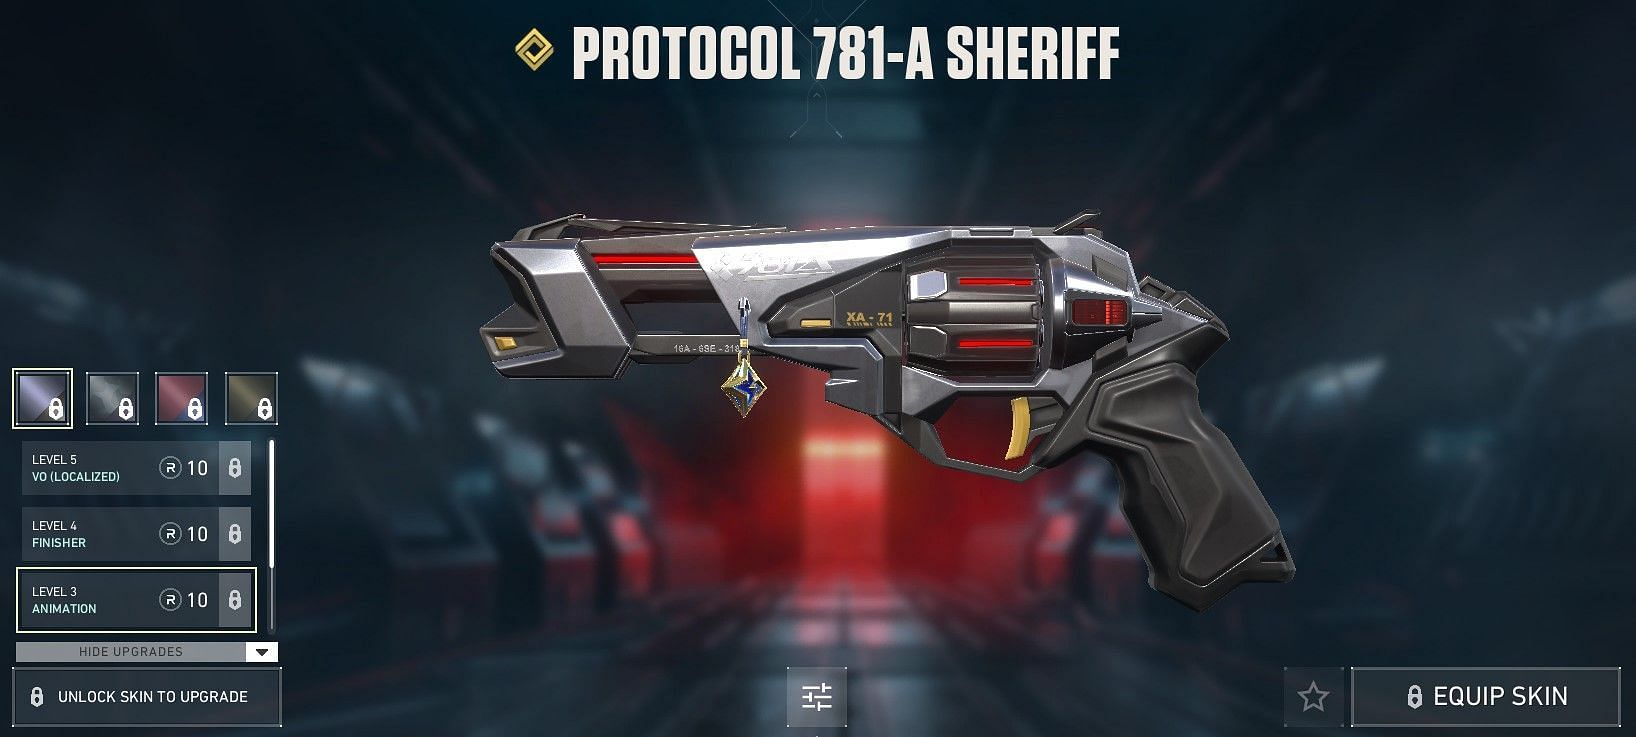 Protocol 781-A Sheriff (Image via Riot Games)